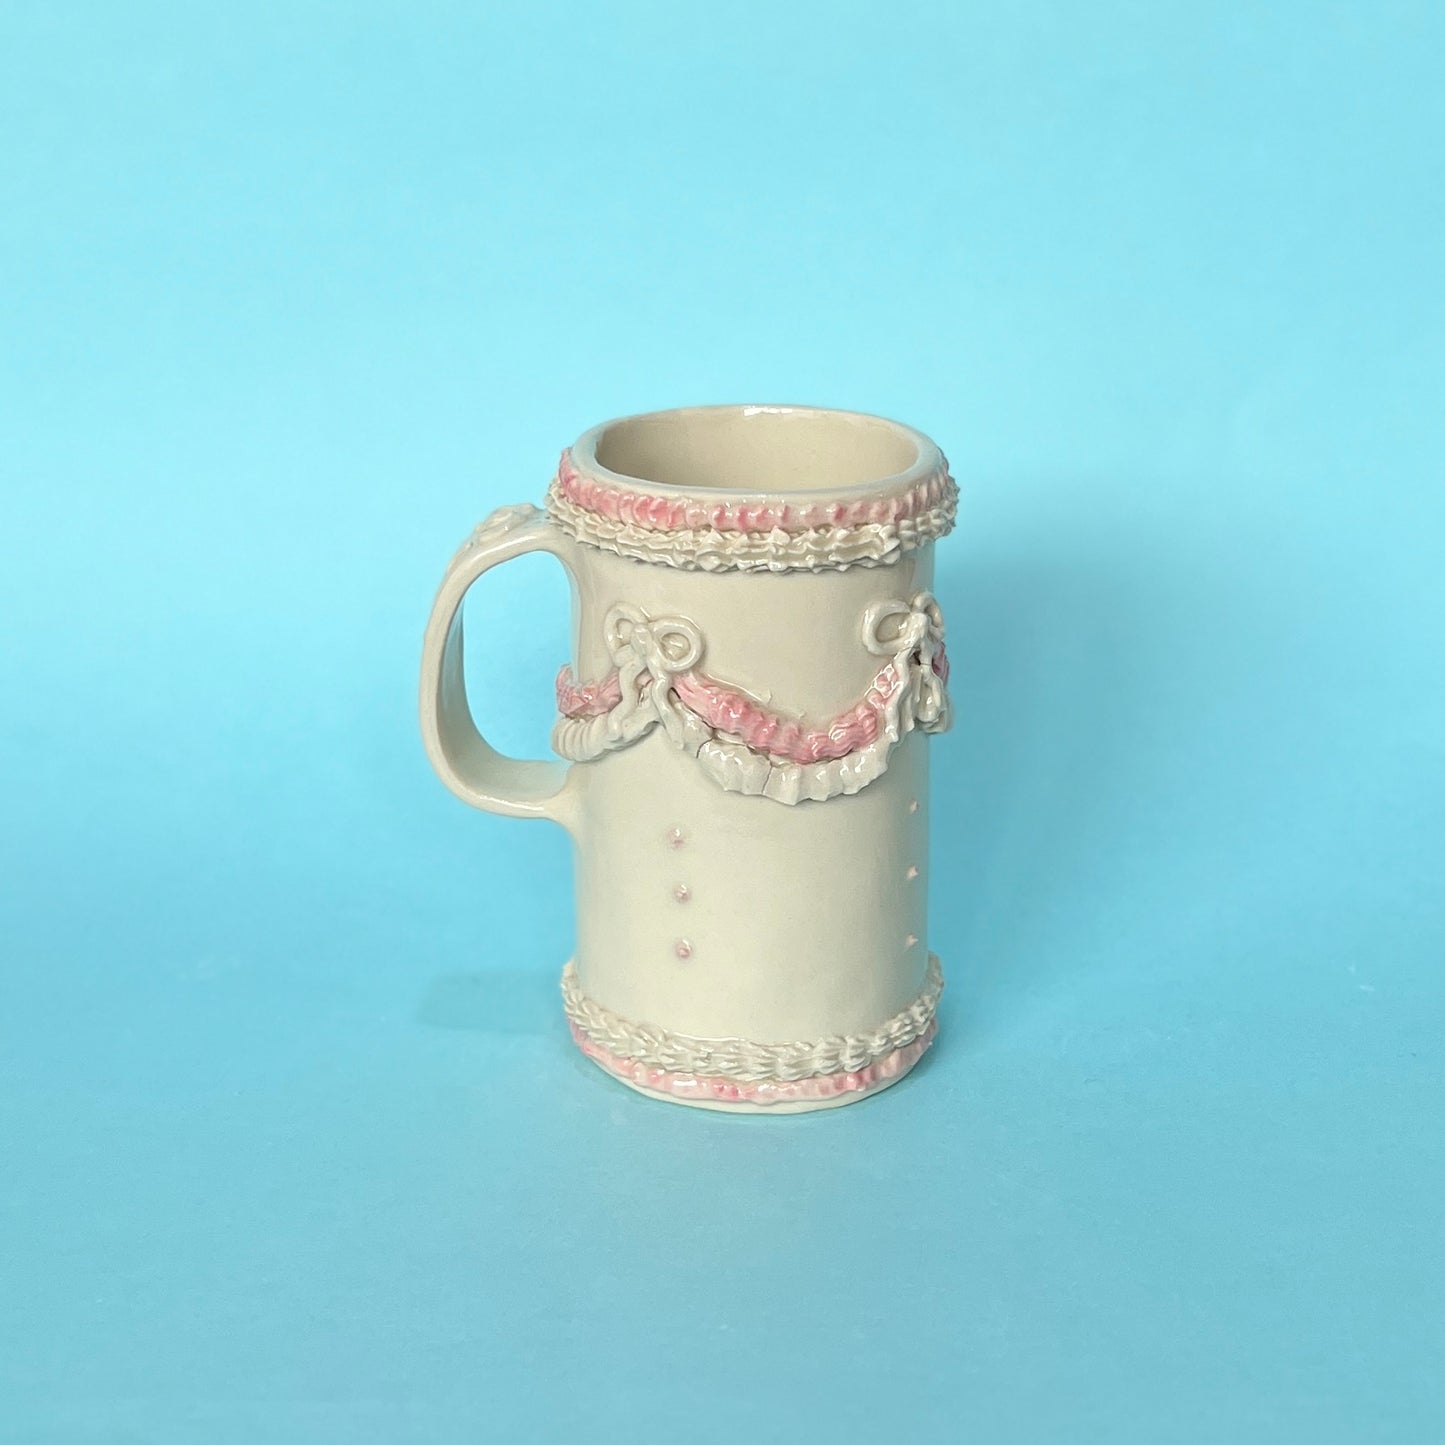 Tall Pink and White Royal Icing Mug